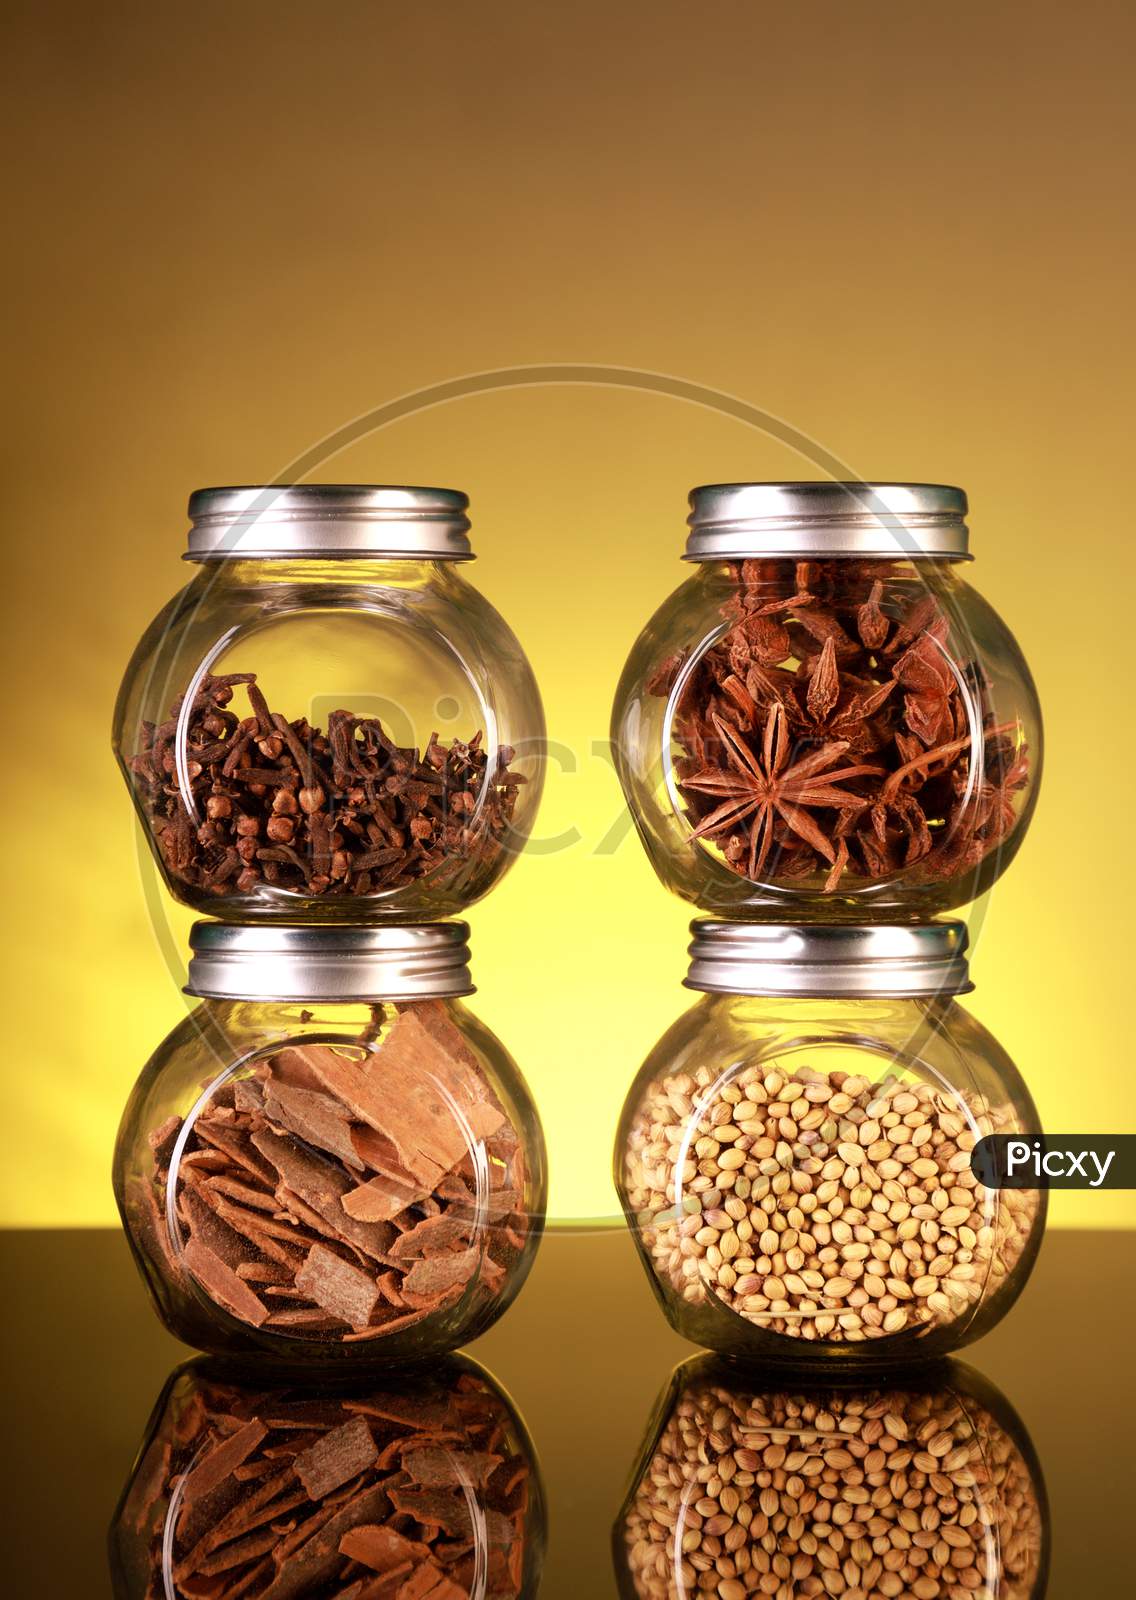 Spice Jars With Star Anise, Cloves, Cinnamon, Coriander Seeds